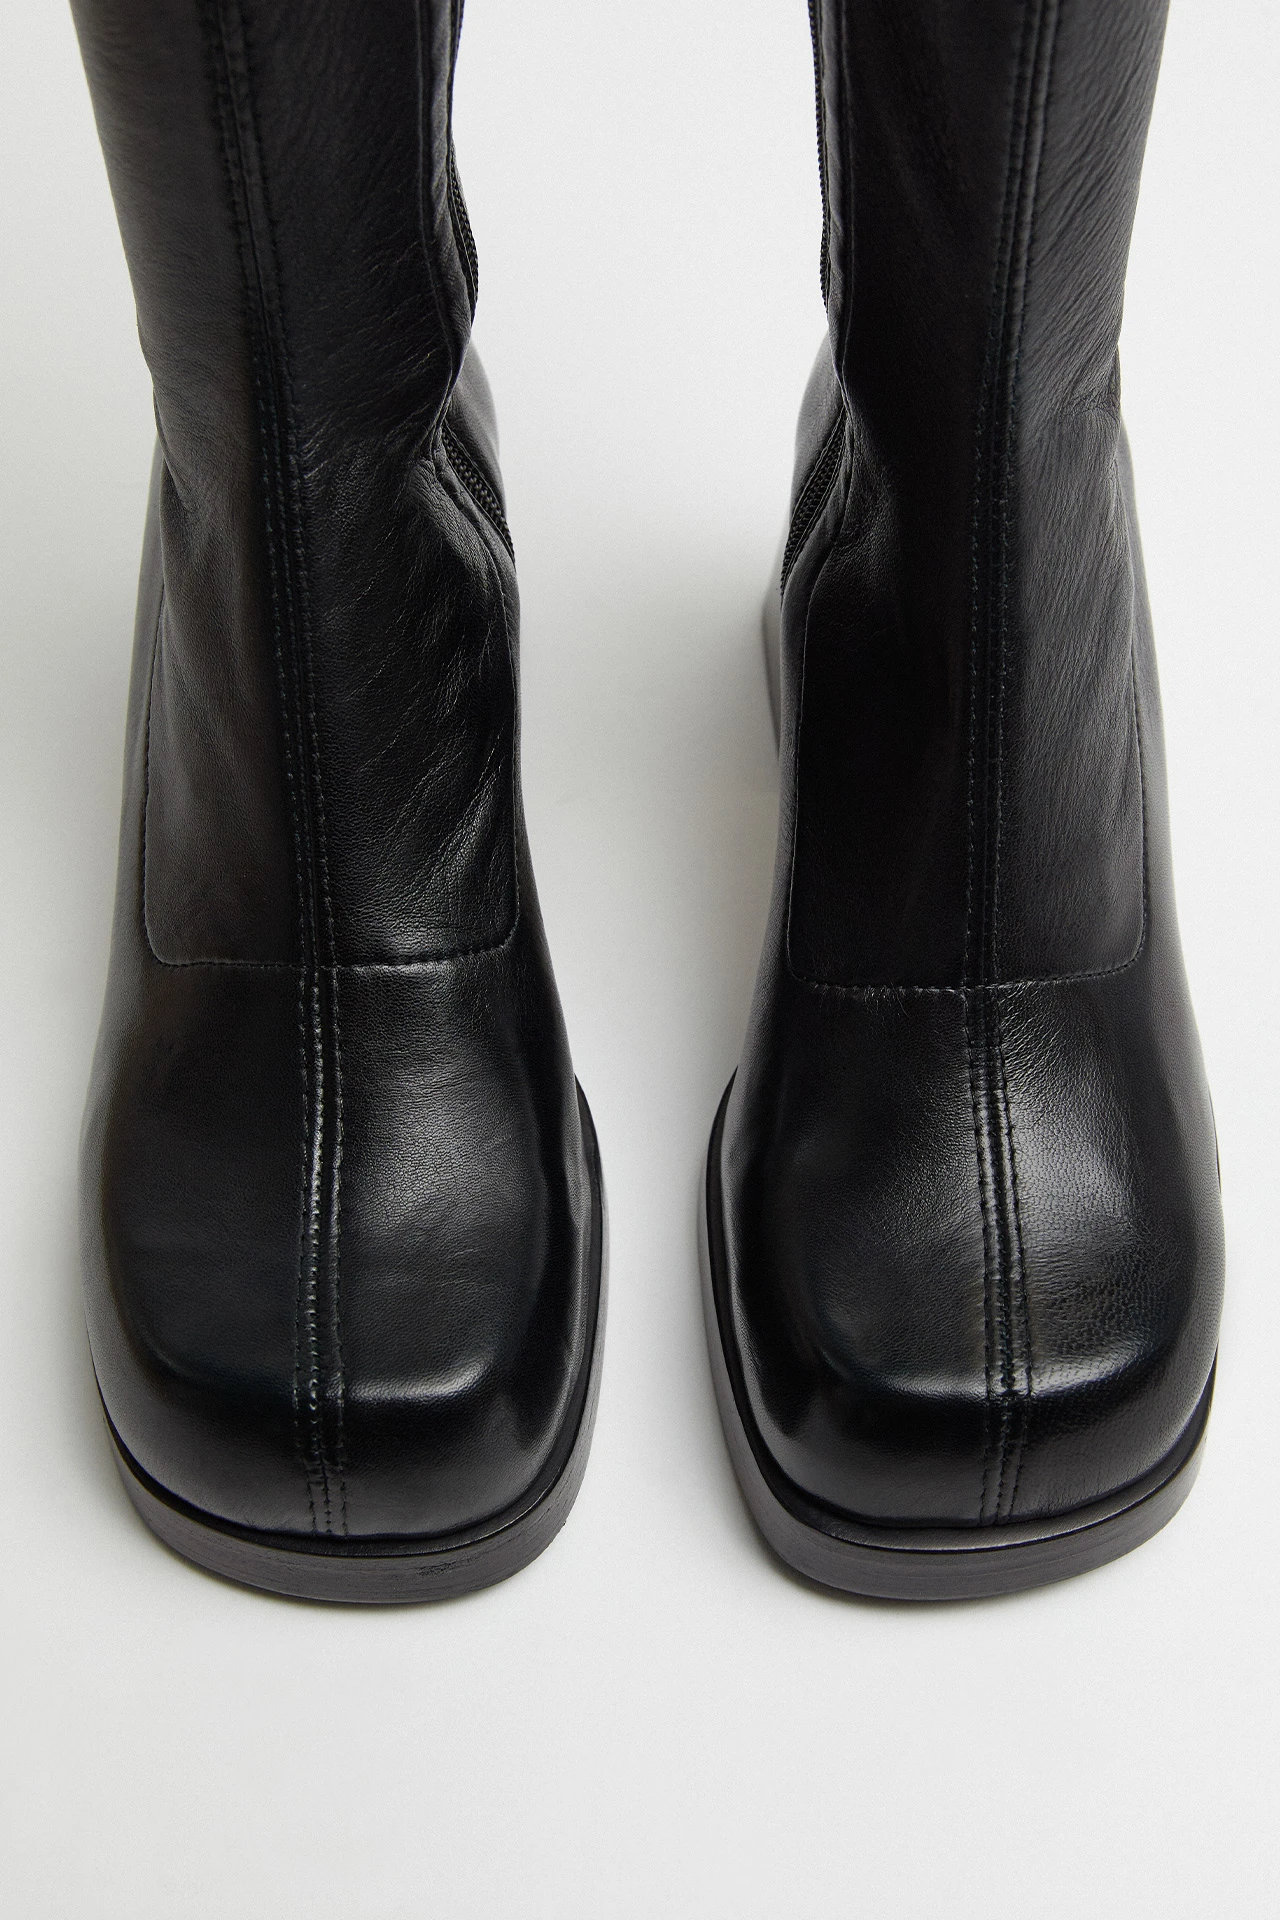 Miista-hedy-black-green-degrade-boots-04